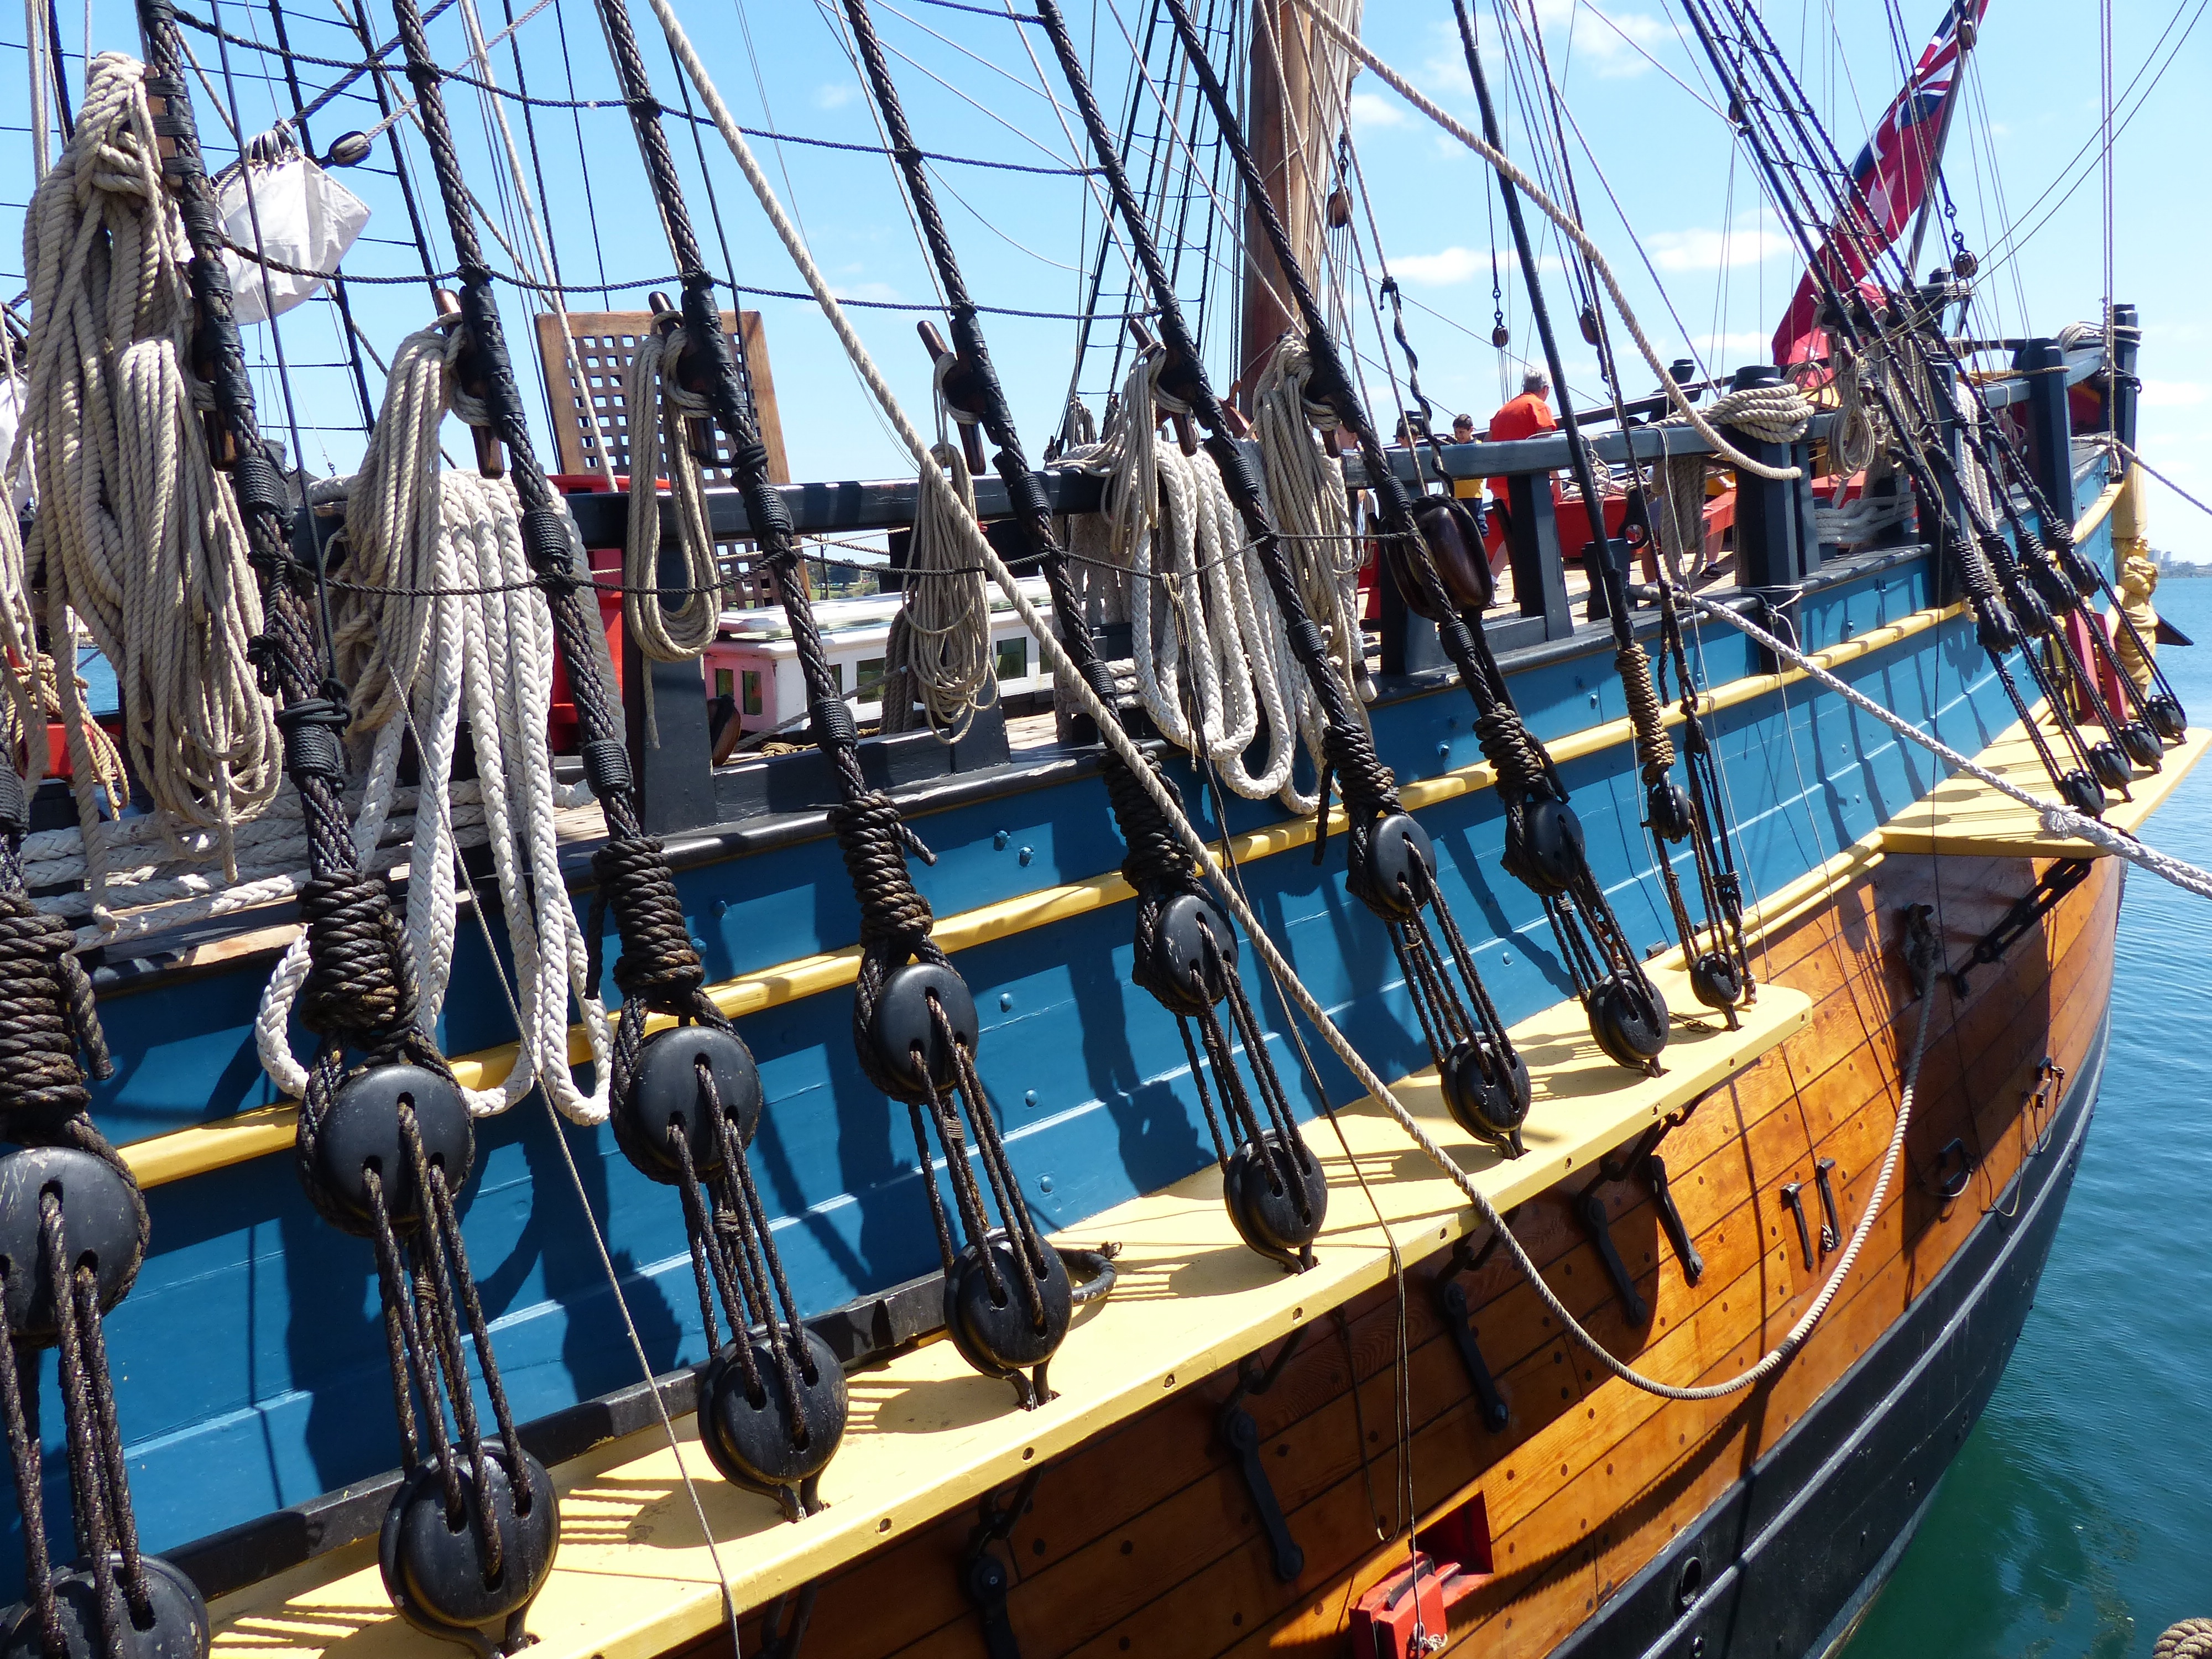 Free Images : rope, boat, old, vehicle, mast, rigging, sailboat, cog ...